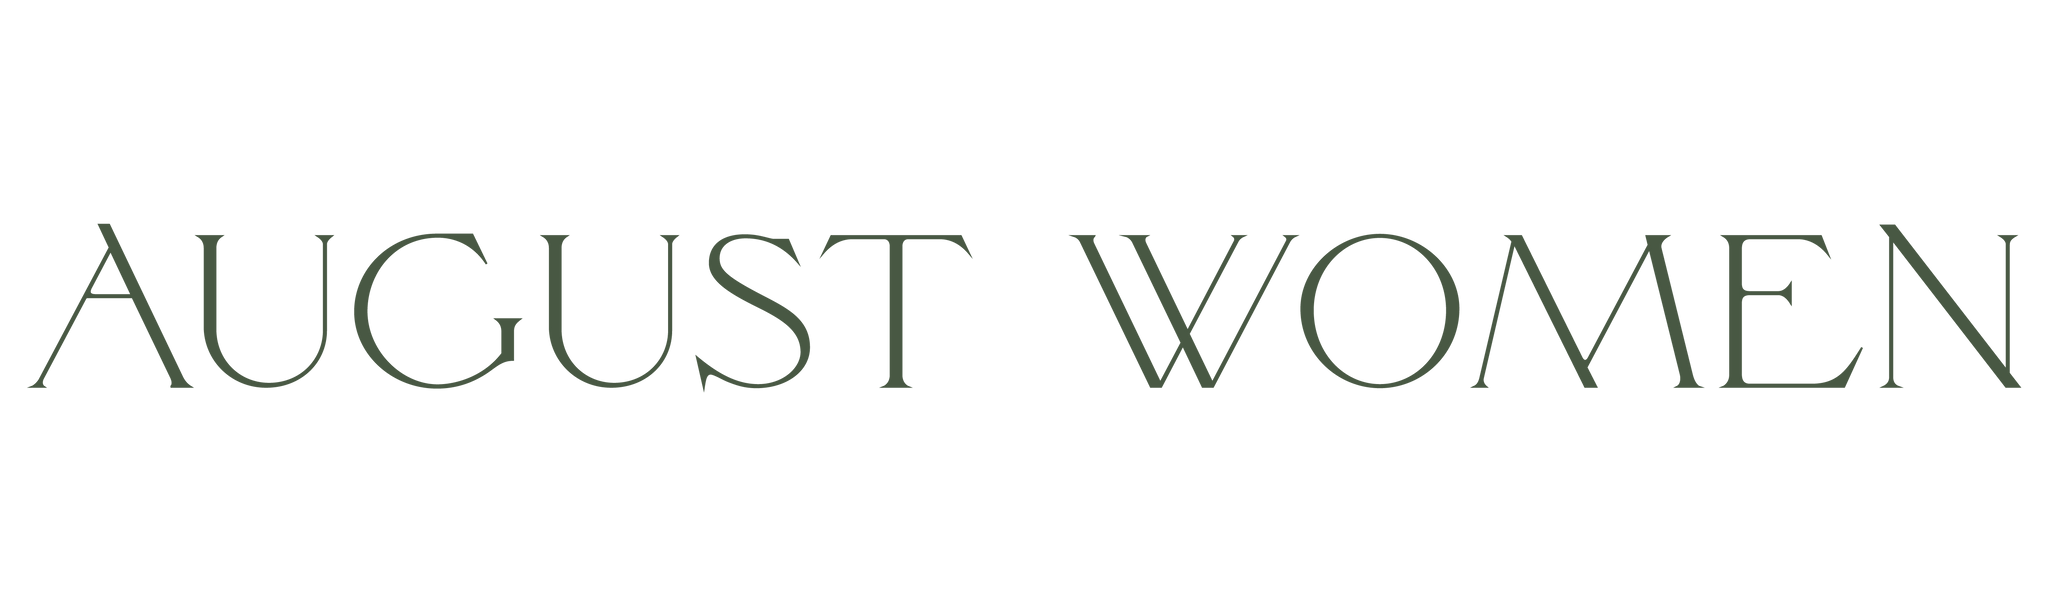 August Women logo